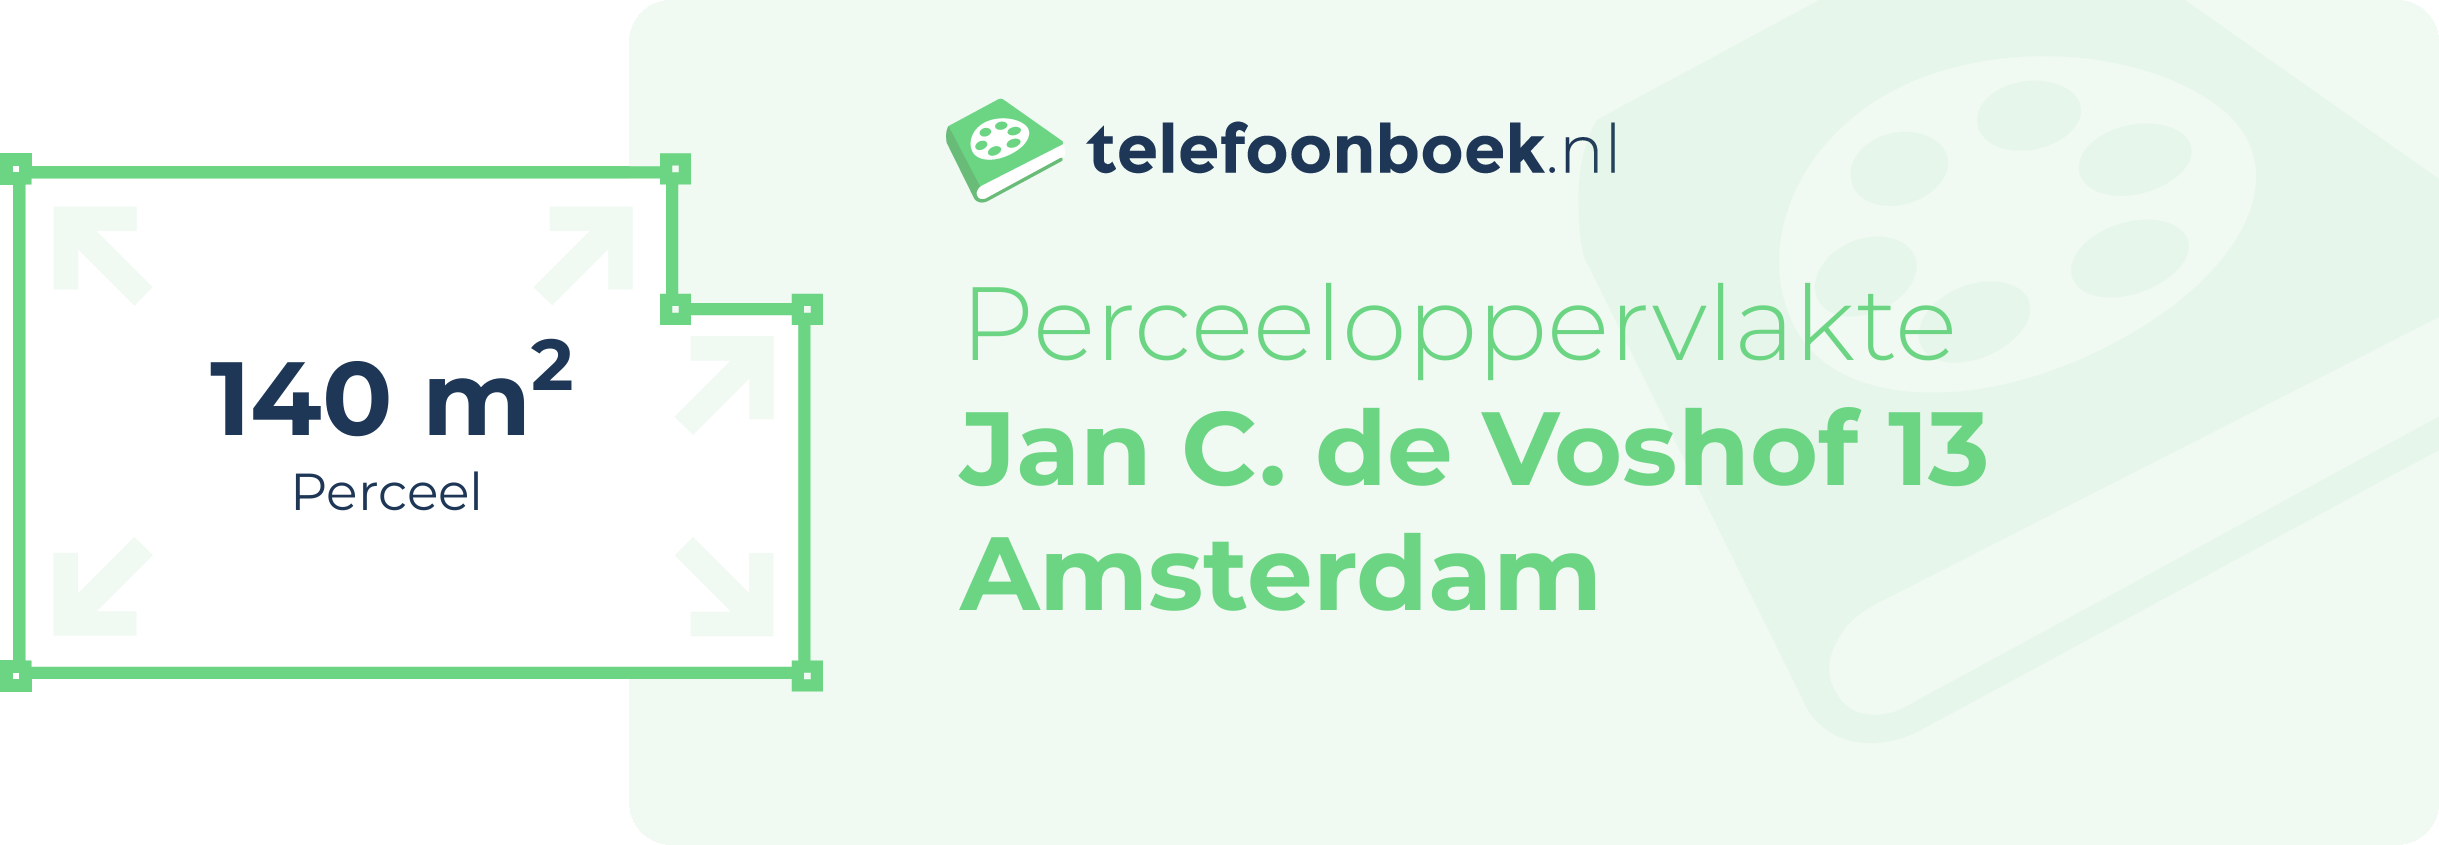 Perceeloppervlakte Jan C. De Voshof 13 Amsterdam